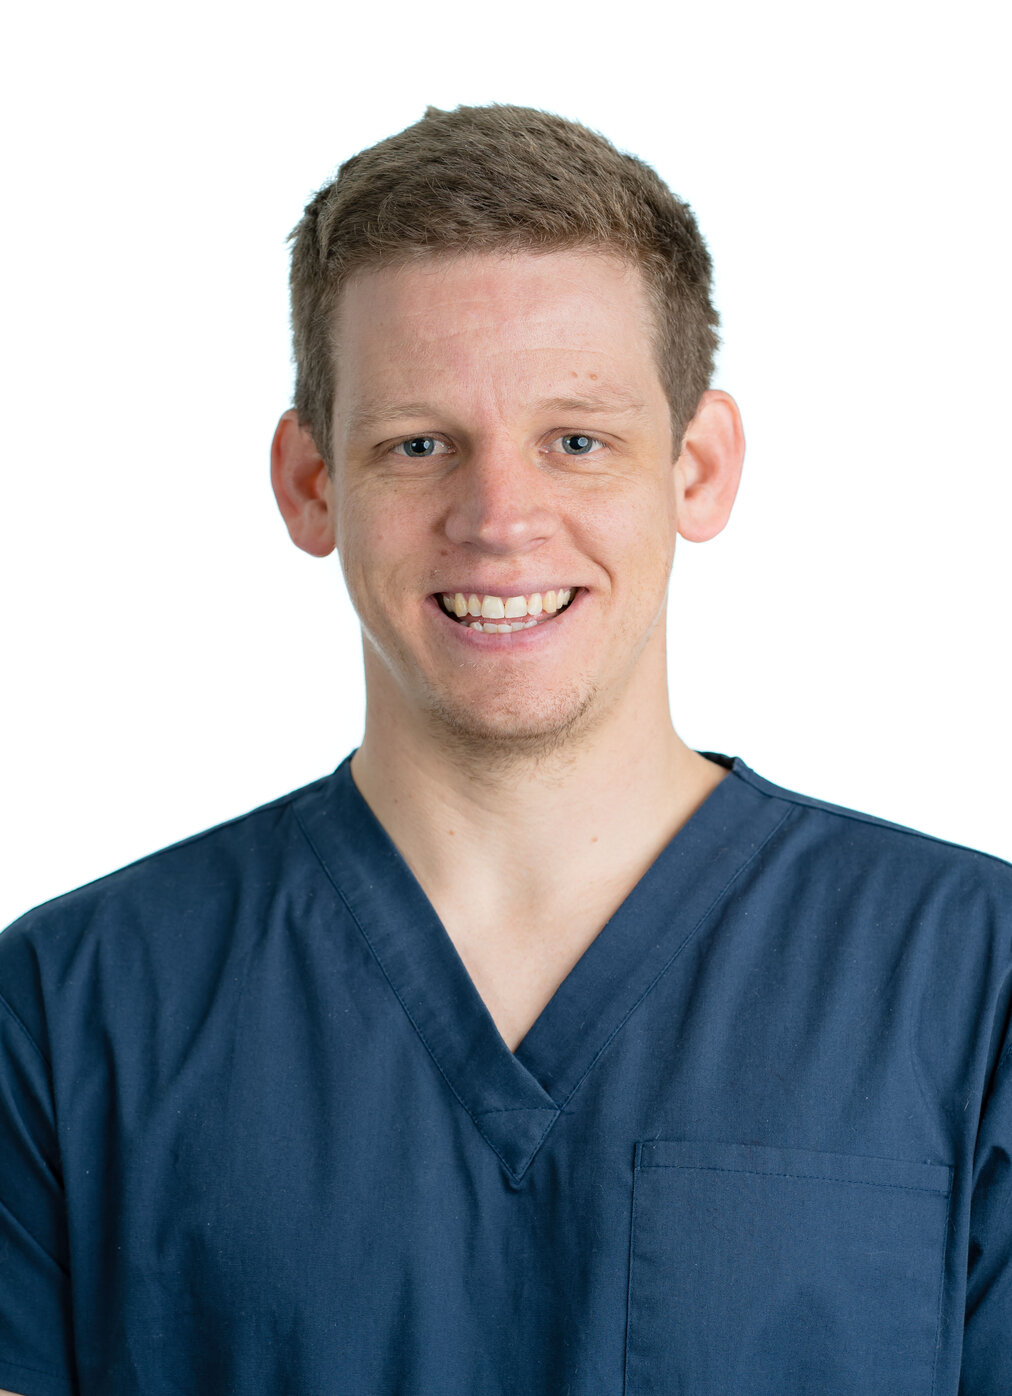 Dr. Lachlan McKeeman's profile photo.